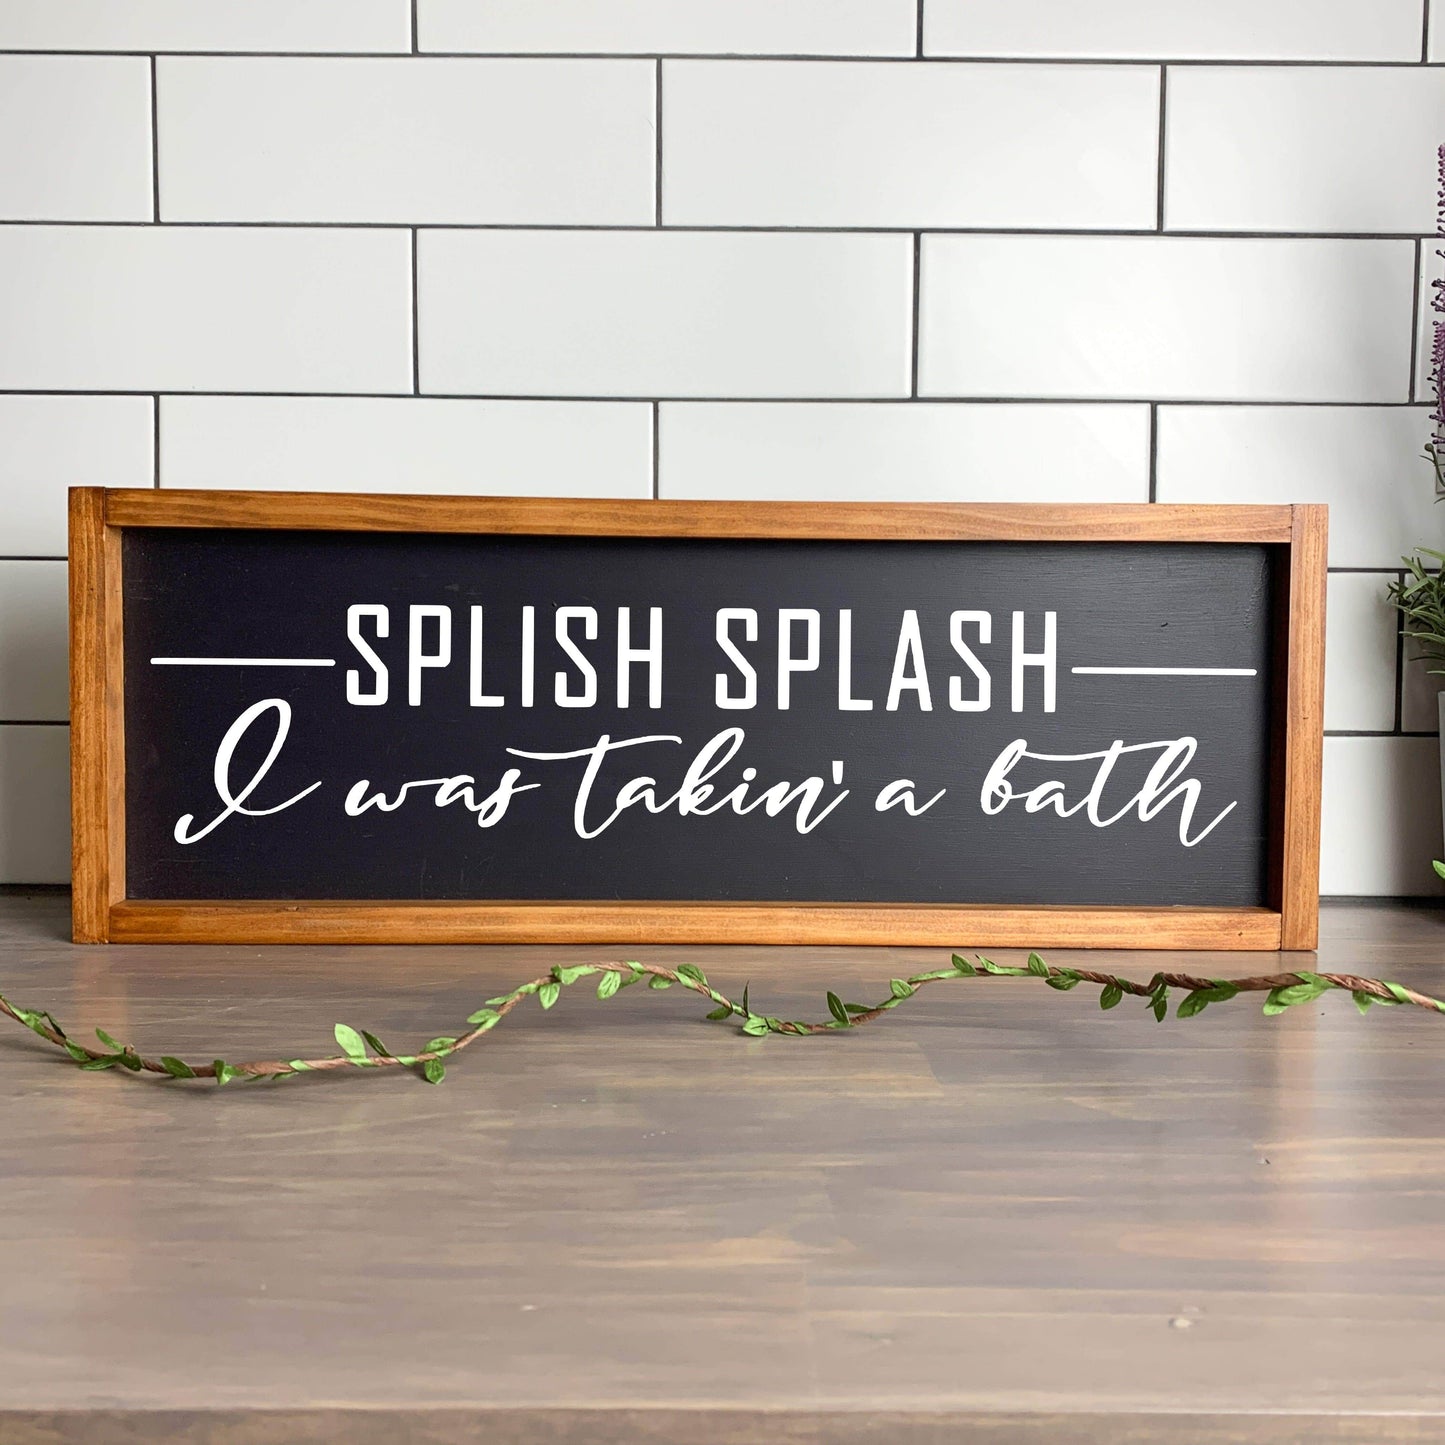 Splish Splash I was taking a bath framed wood sign, farmhouse sign, rustic decor, home decor